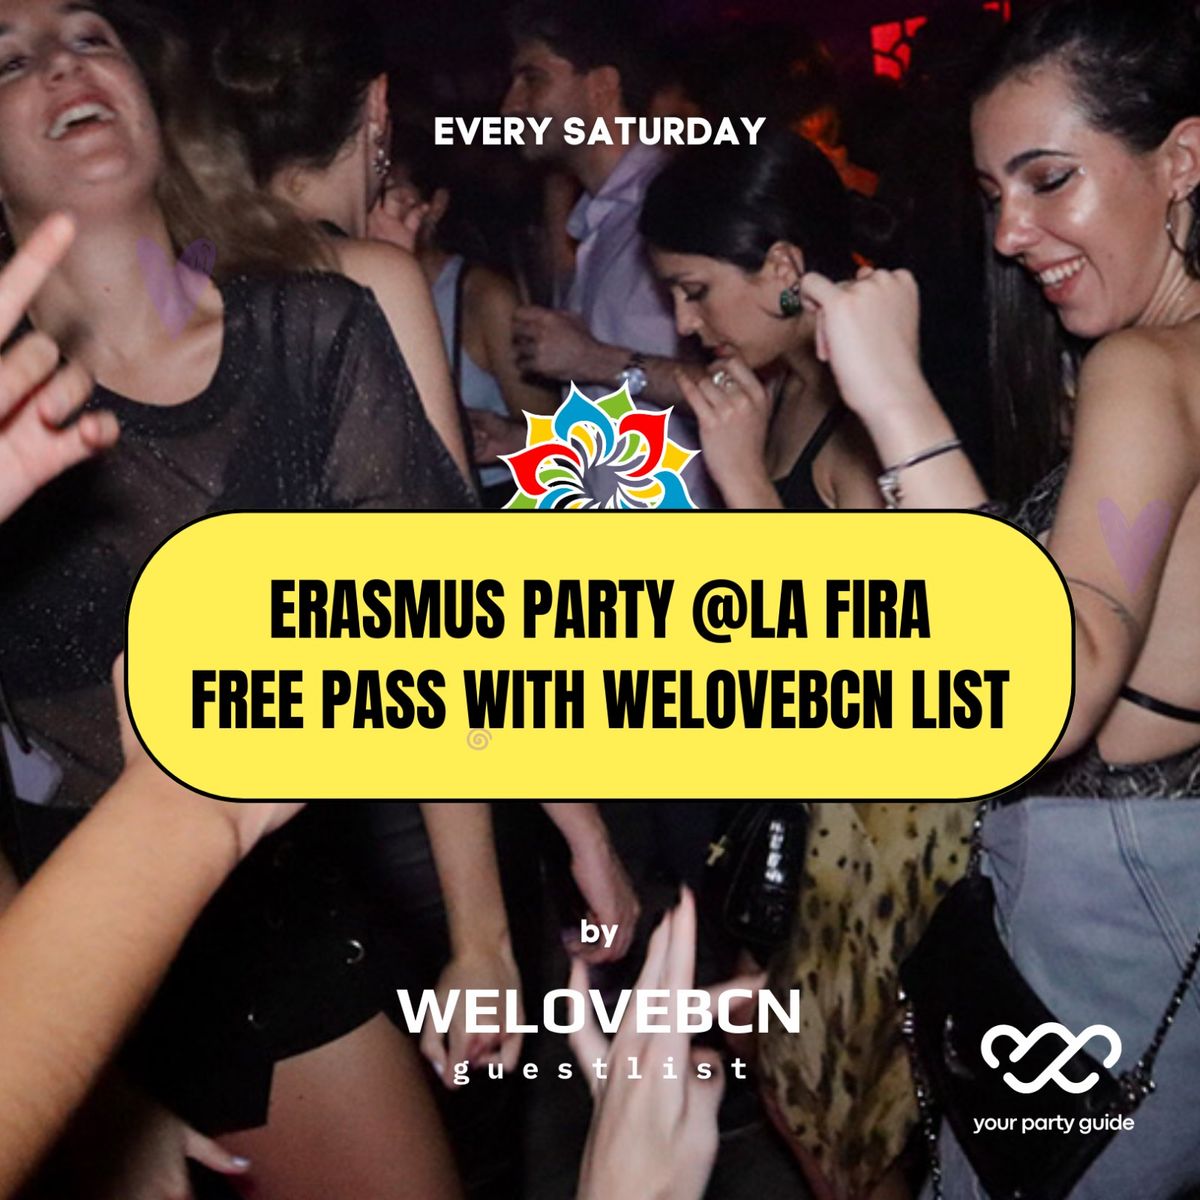 EVERY Saturday Erasmus FREE Party at La Fira Villaroel til 2am with WELOVEBCN LIST